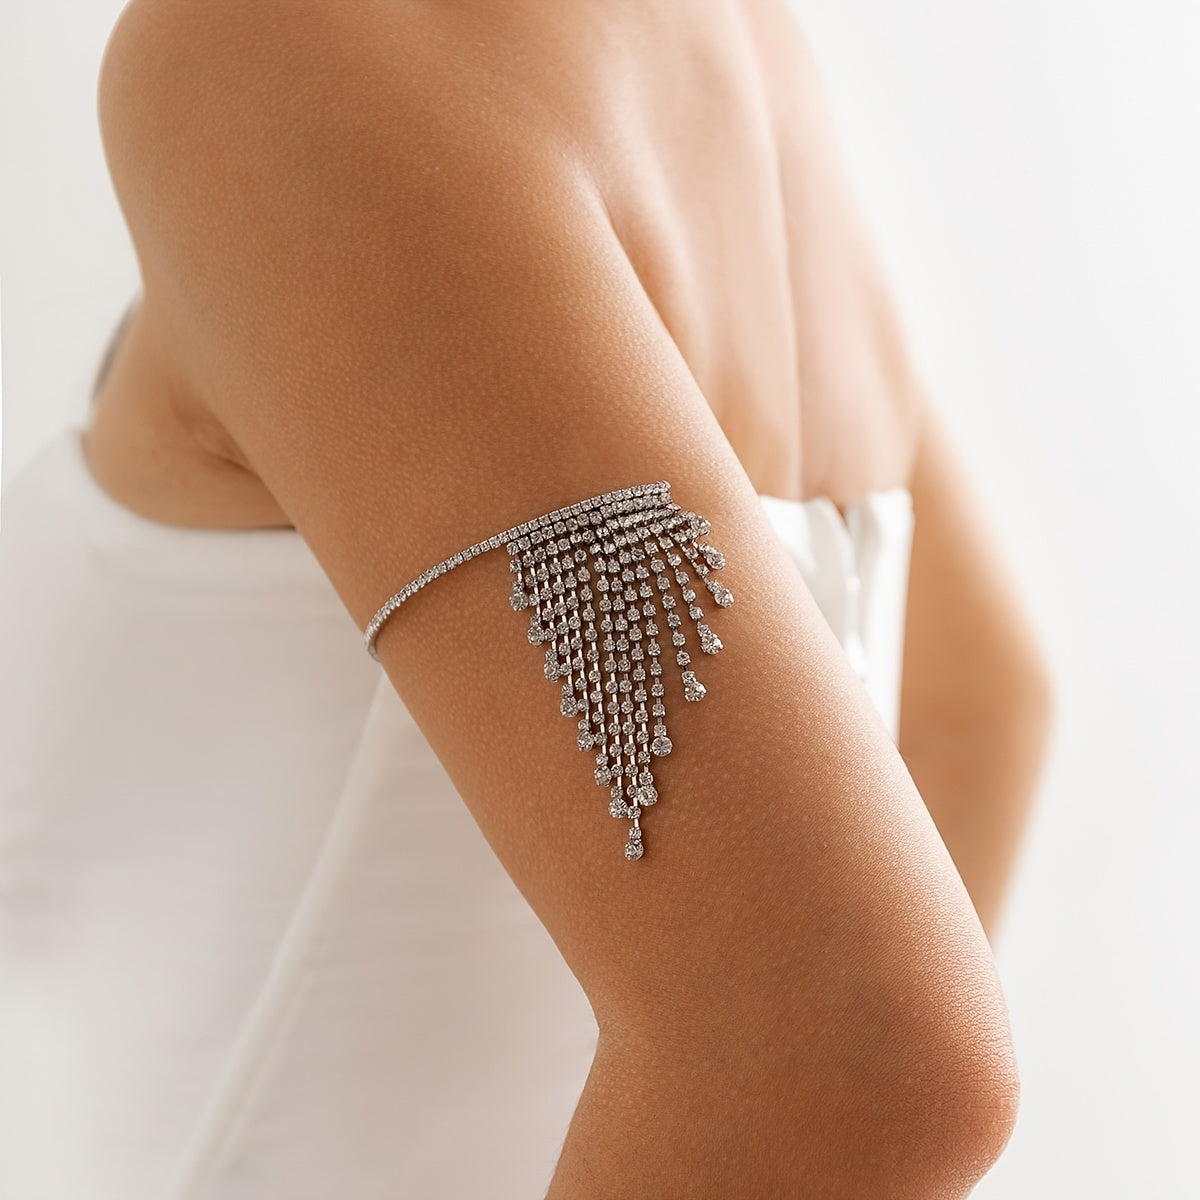 Sparkling Rhinestone Tassel Arm Bracelet - Adjustable Open Cuff Jewelry for a Sweet Look